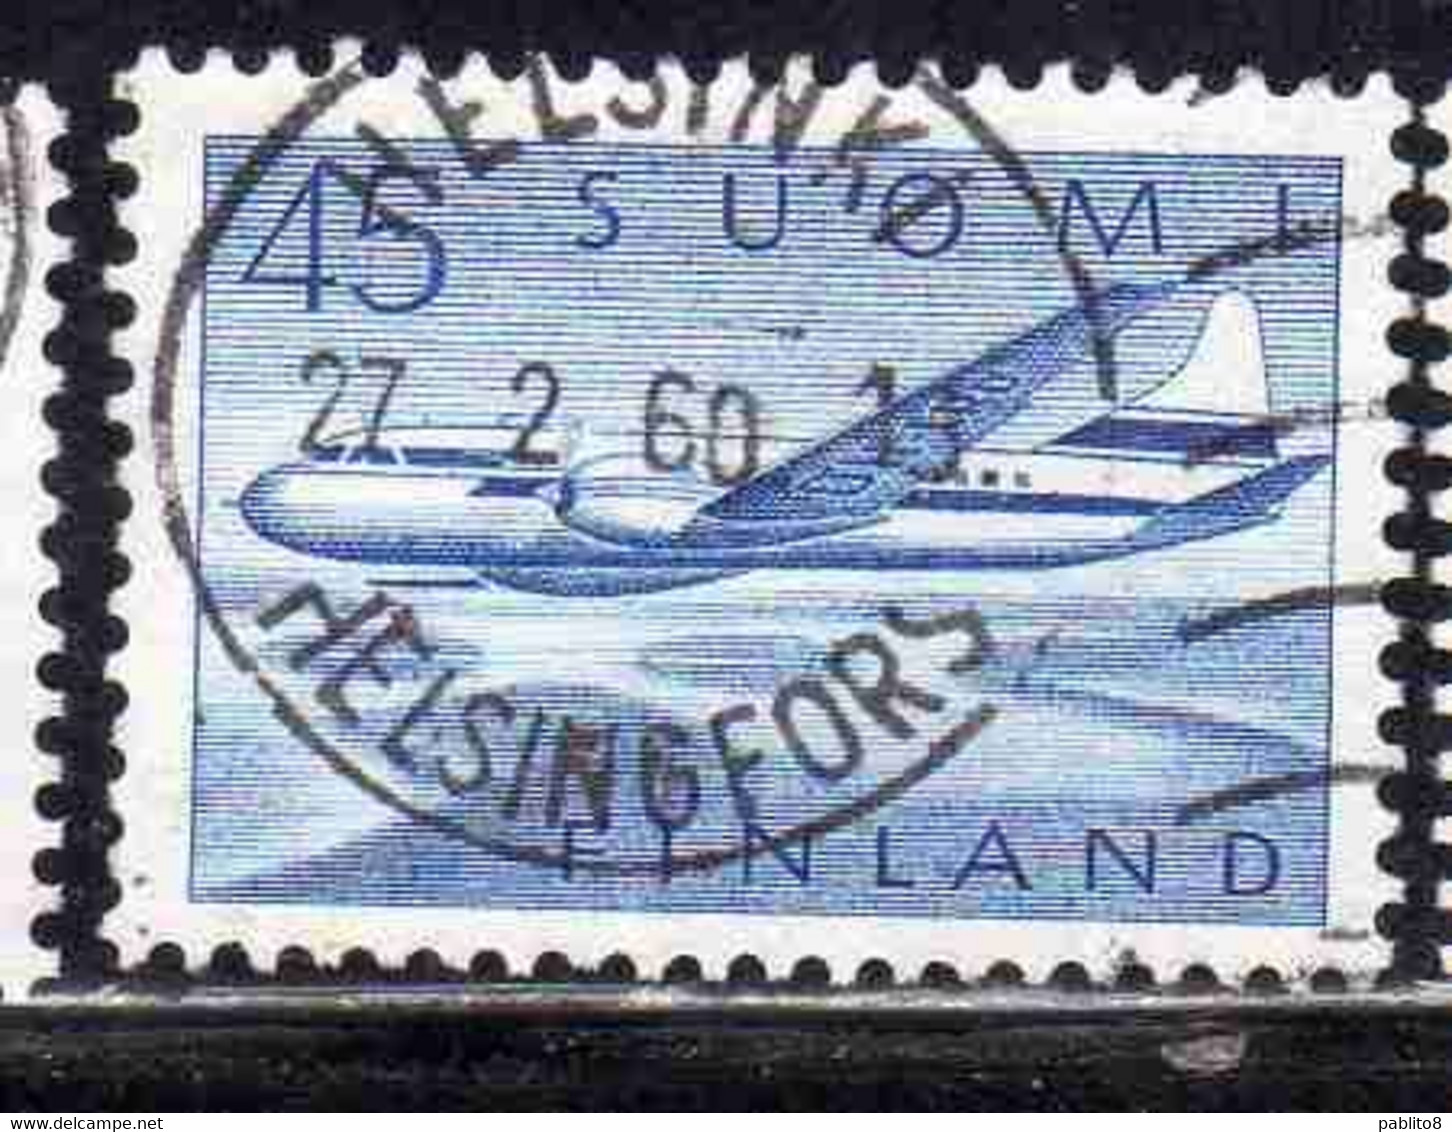 SUOMI FINLAND FINLANDIA FINLANDE 1958 AIR POST MAIL AIRMAIL CONVAIR OVER LAKES 34m USED USATO OBLITERE' - Usados